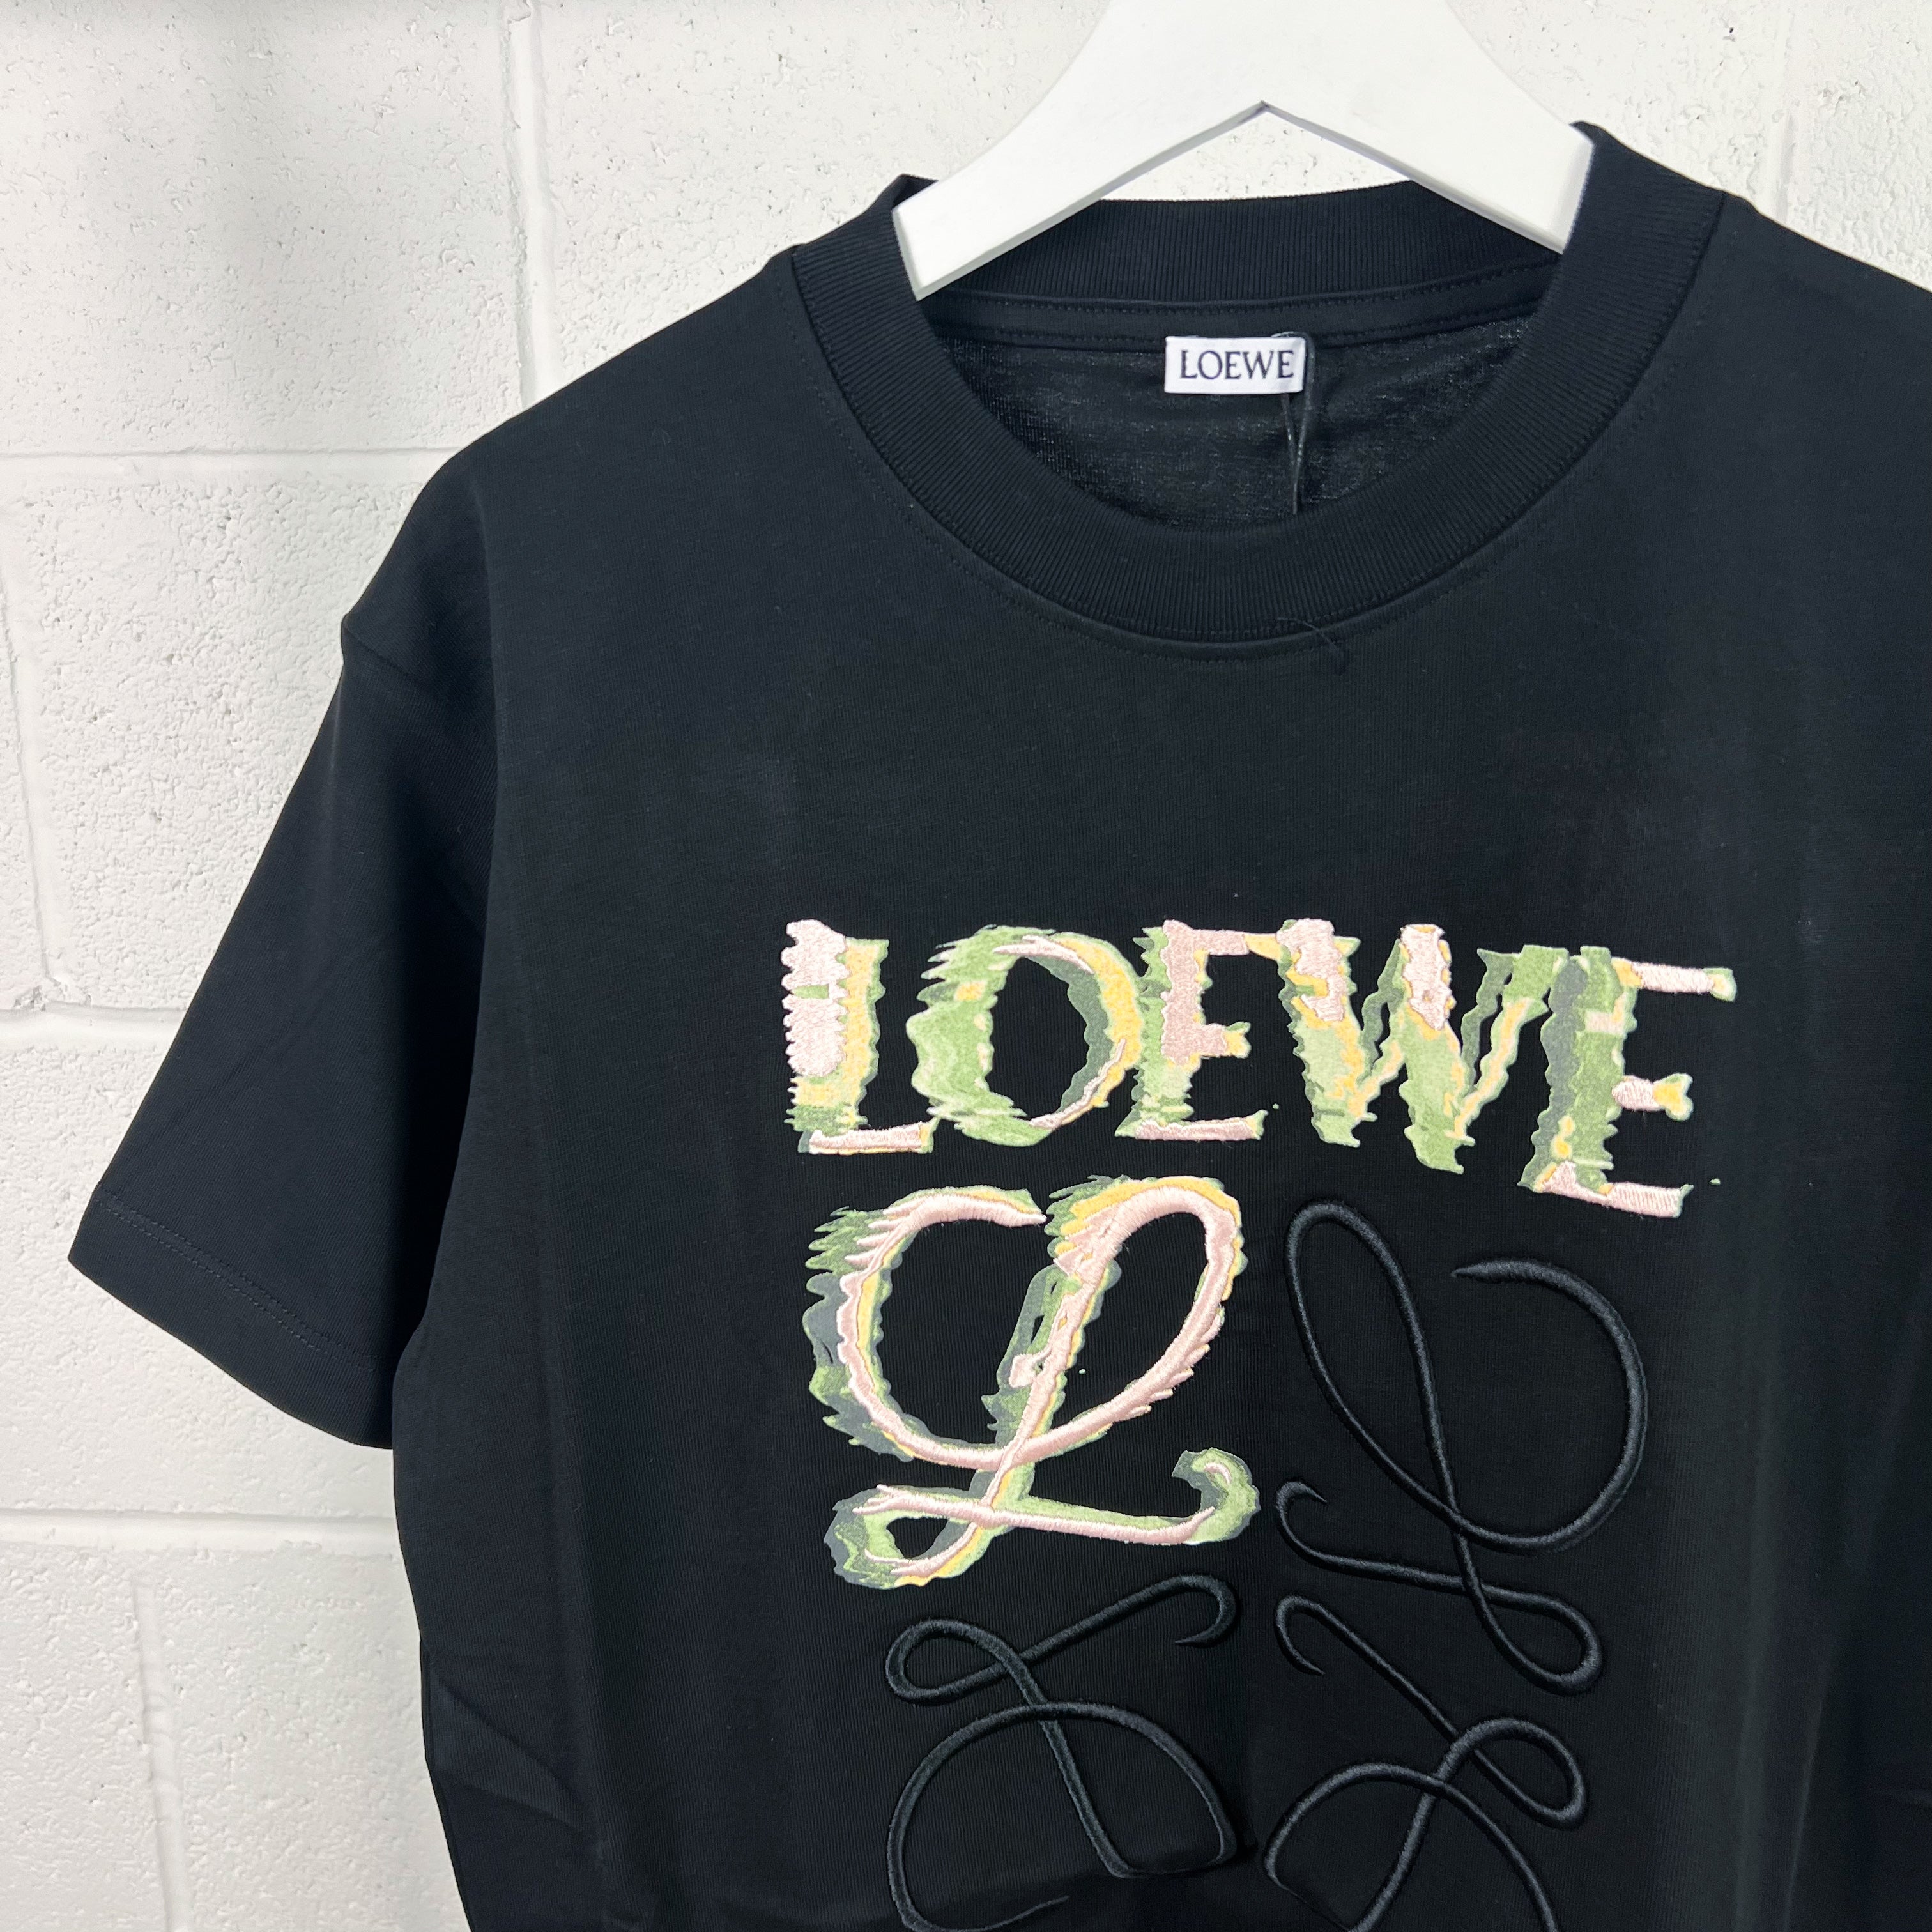 Loewe Embroidered Logo Tee